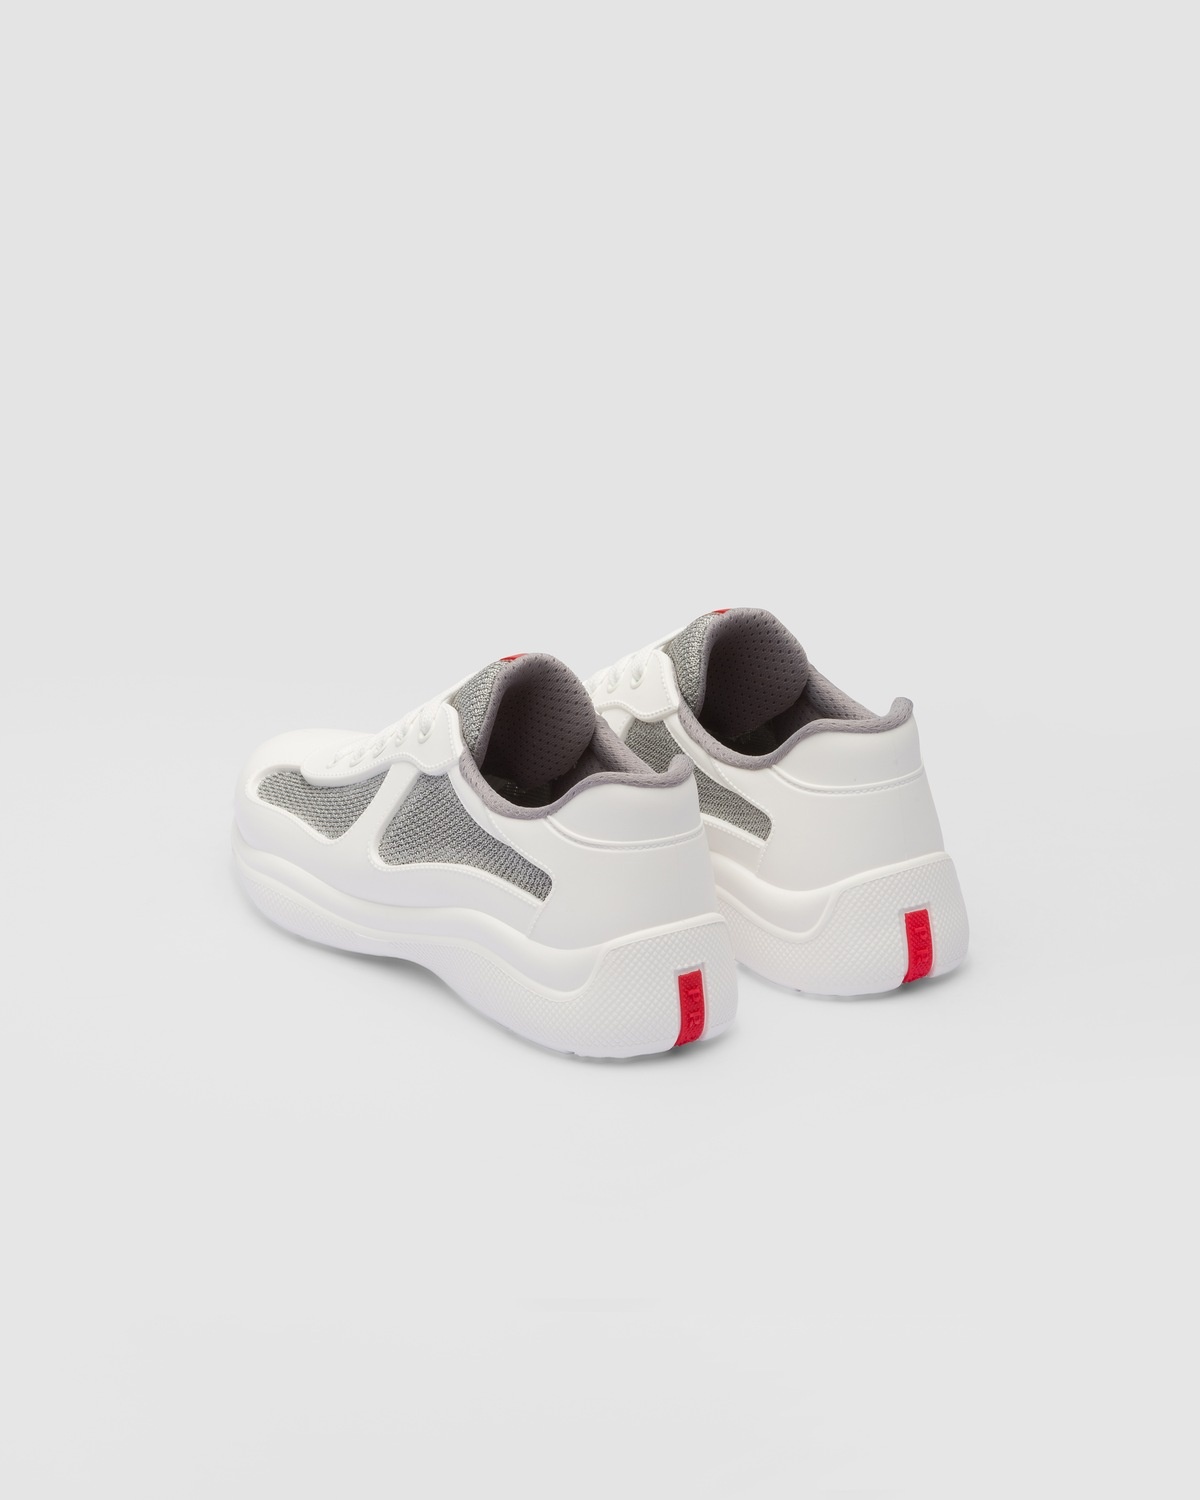 Prada America's Cup Soft rubber and bike fabric sneakers - 5